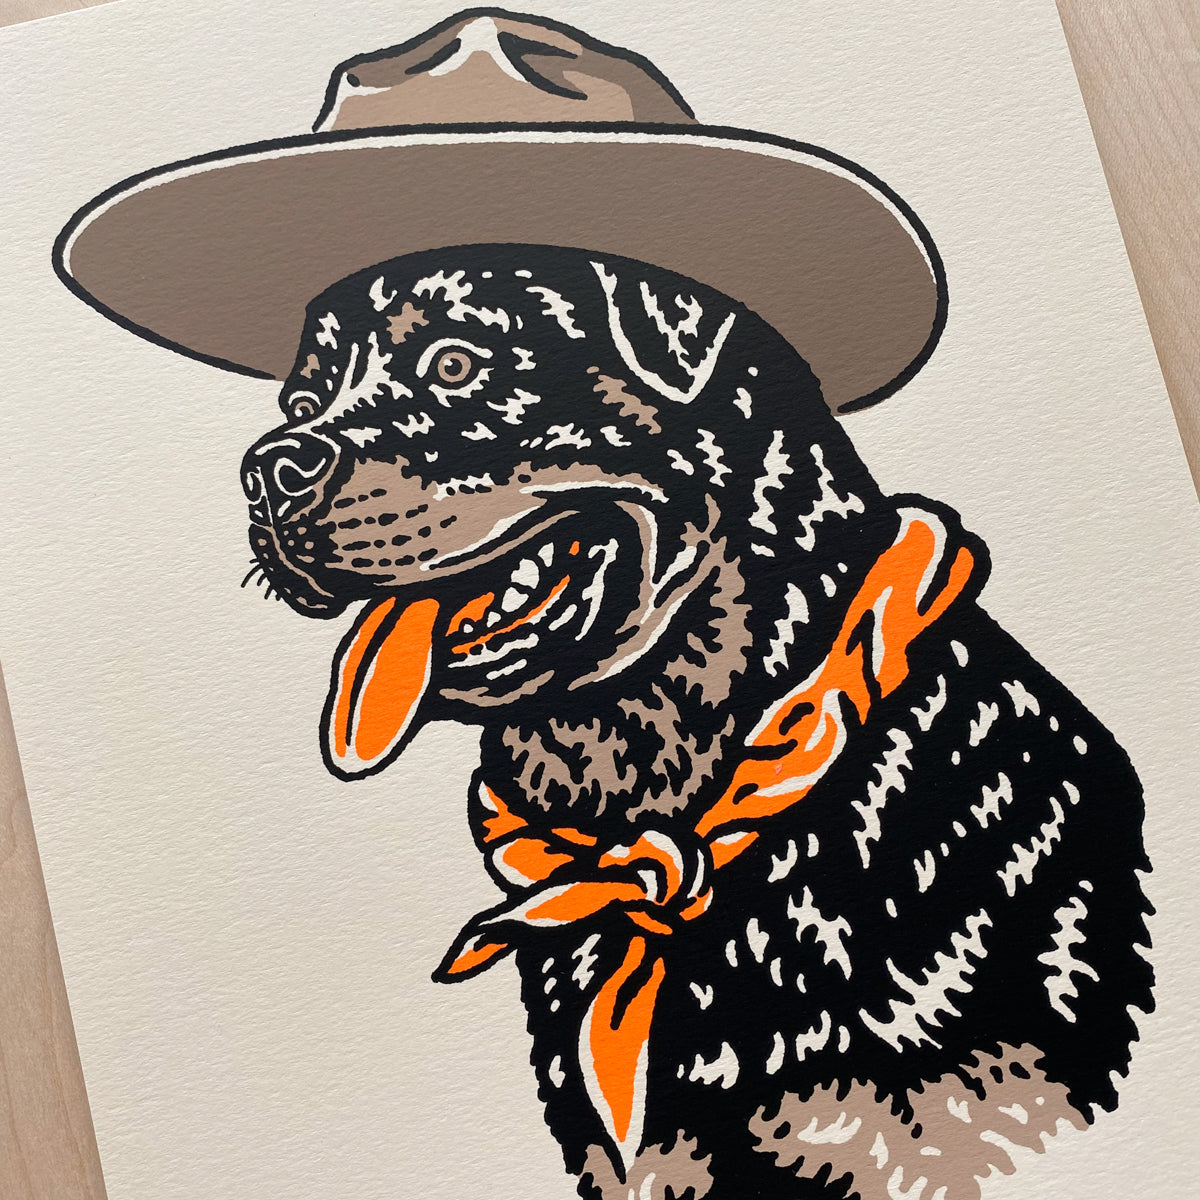 Rottweiler Cowdog - Signed 8x10in Print #305